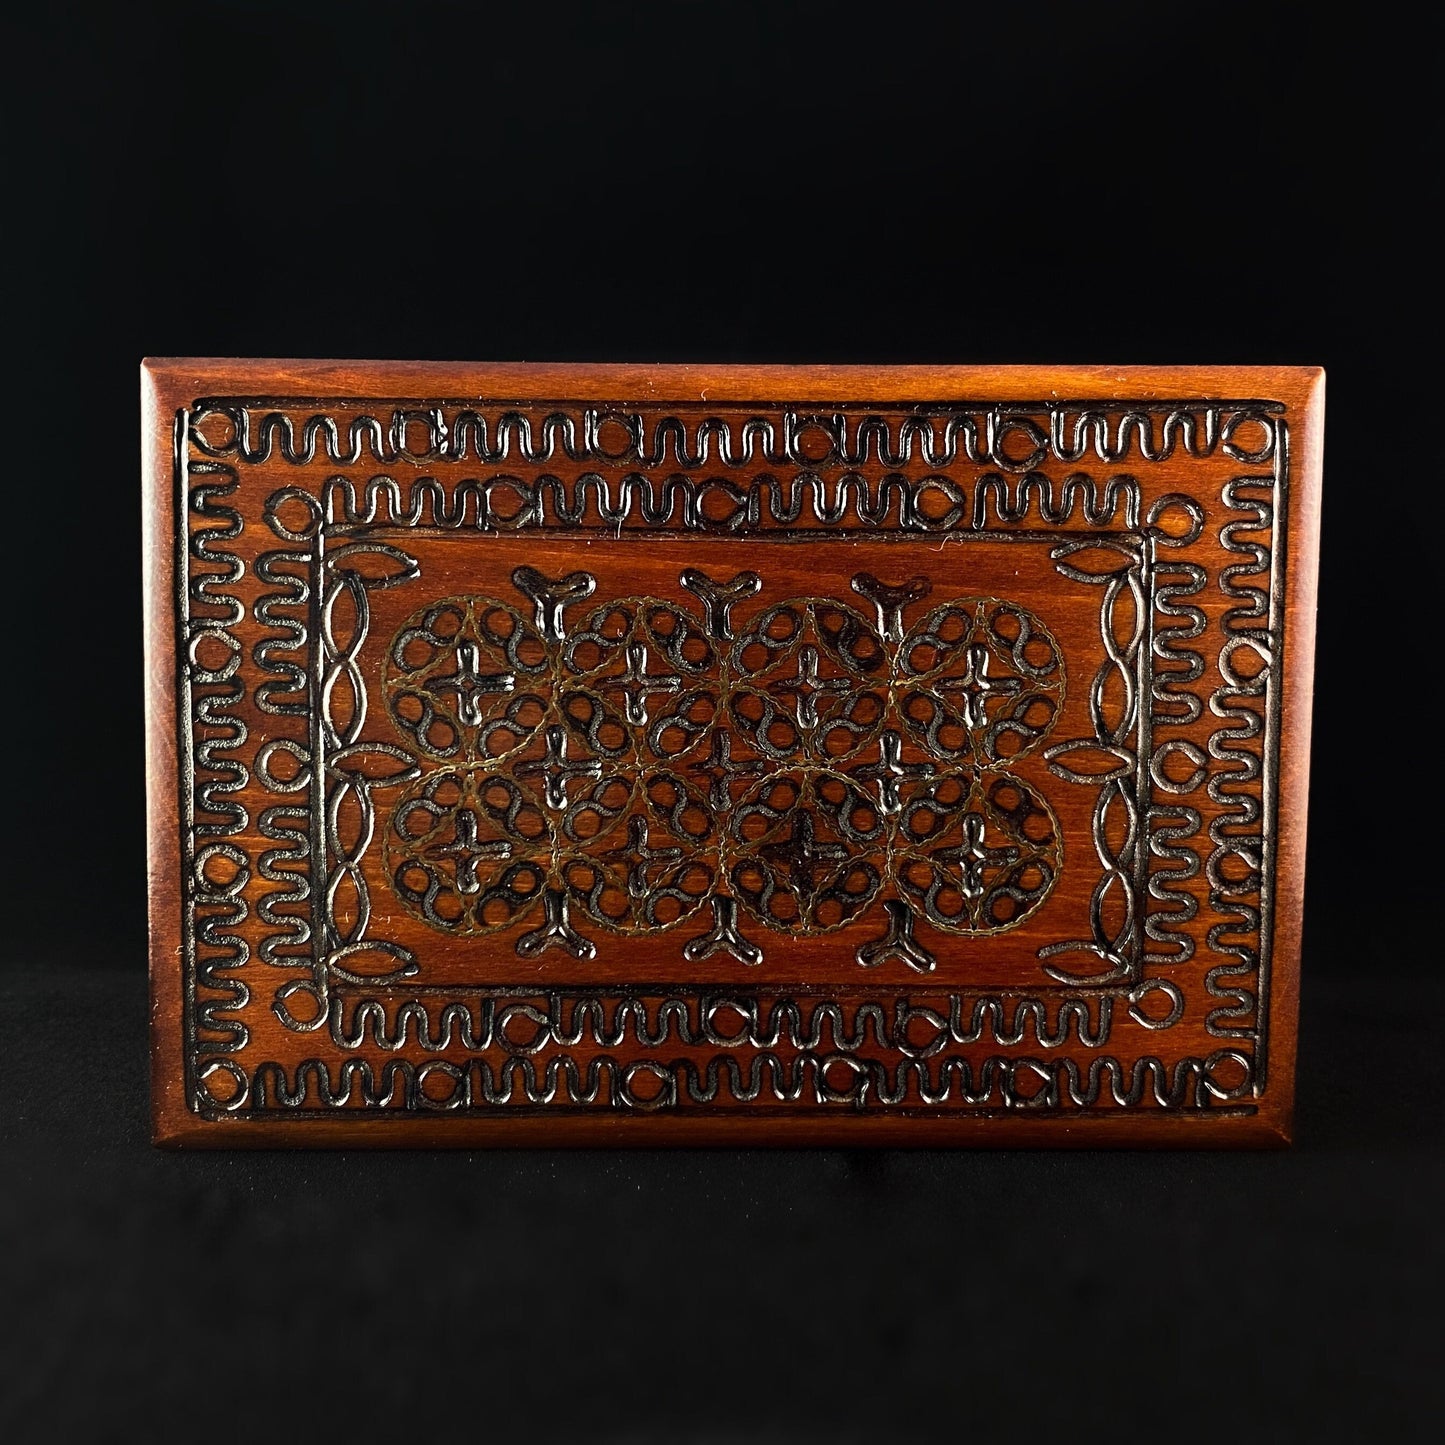 Celtic Patterned Top Jewelry Box, Handmade Hinged Wooden Treasure Box